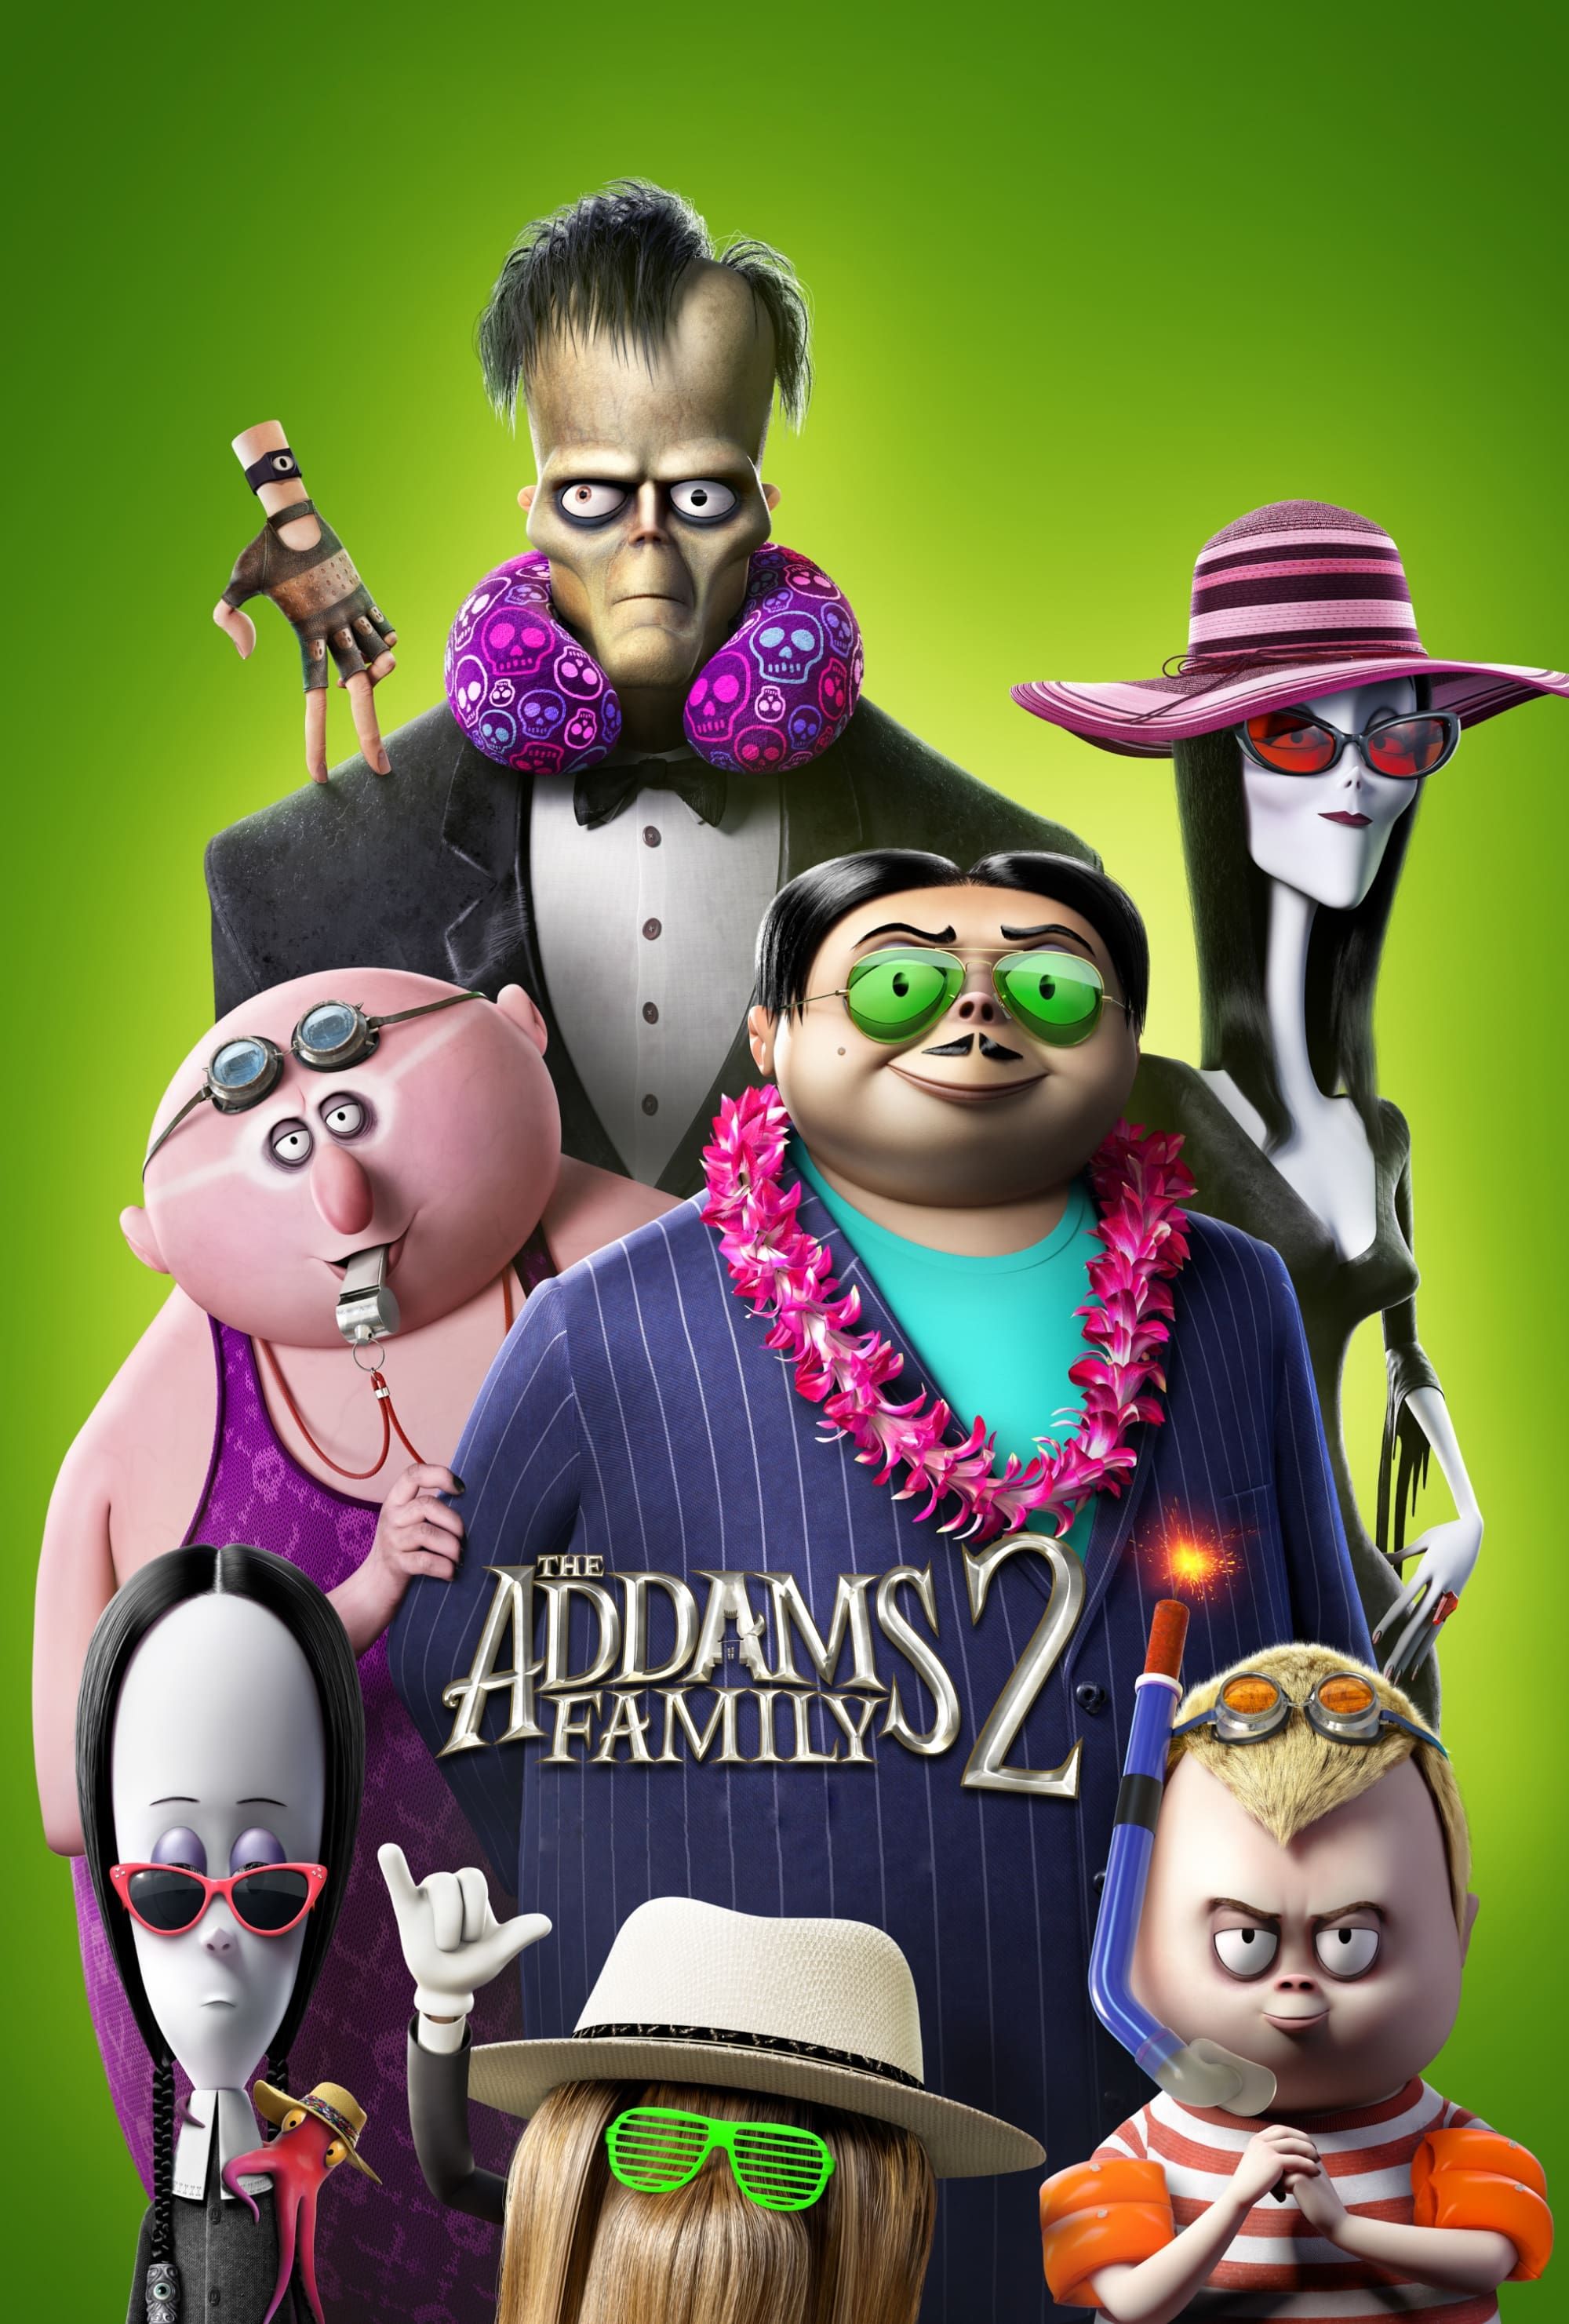 A Família Addams 2